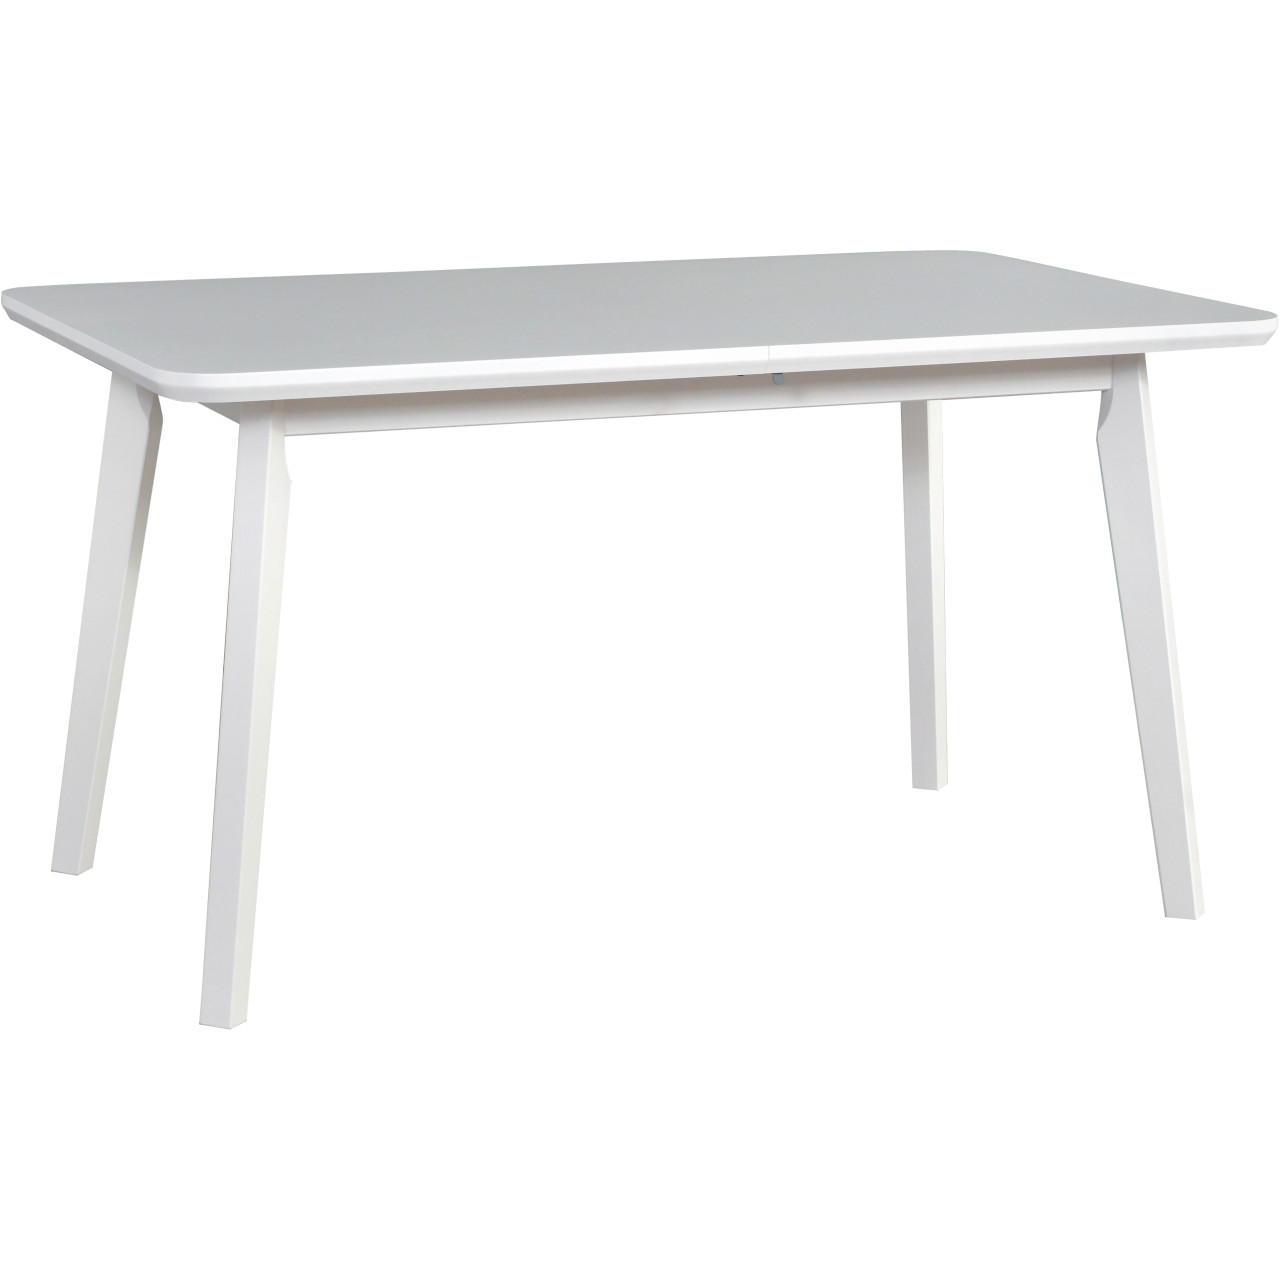 Table OSLO 7 80x140/180 white MDF